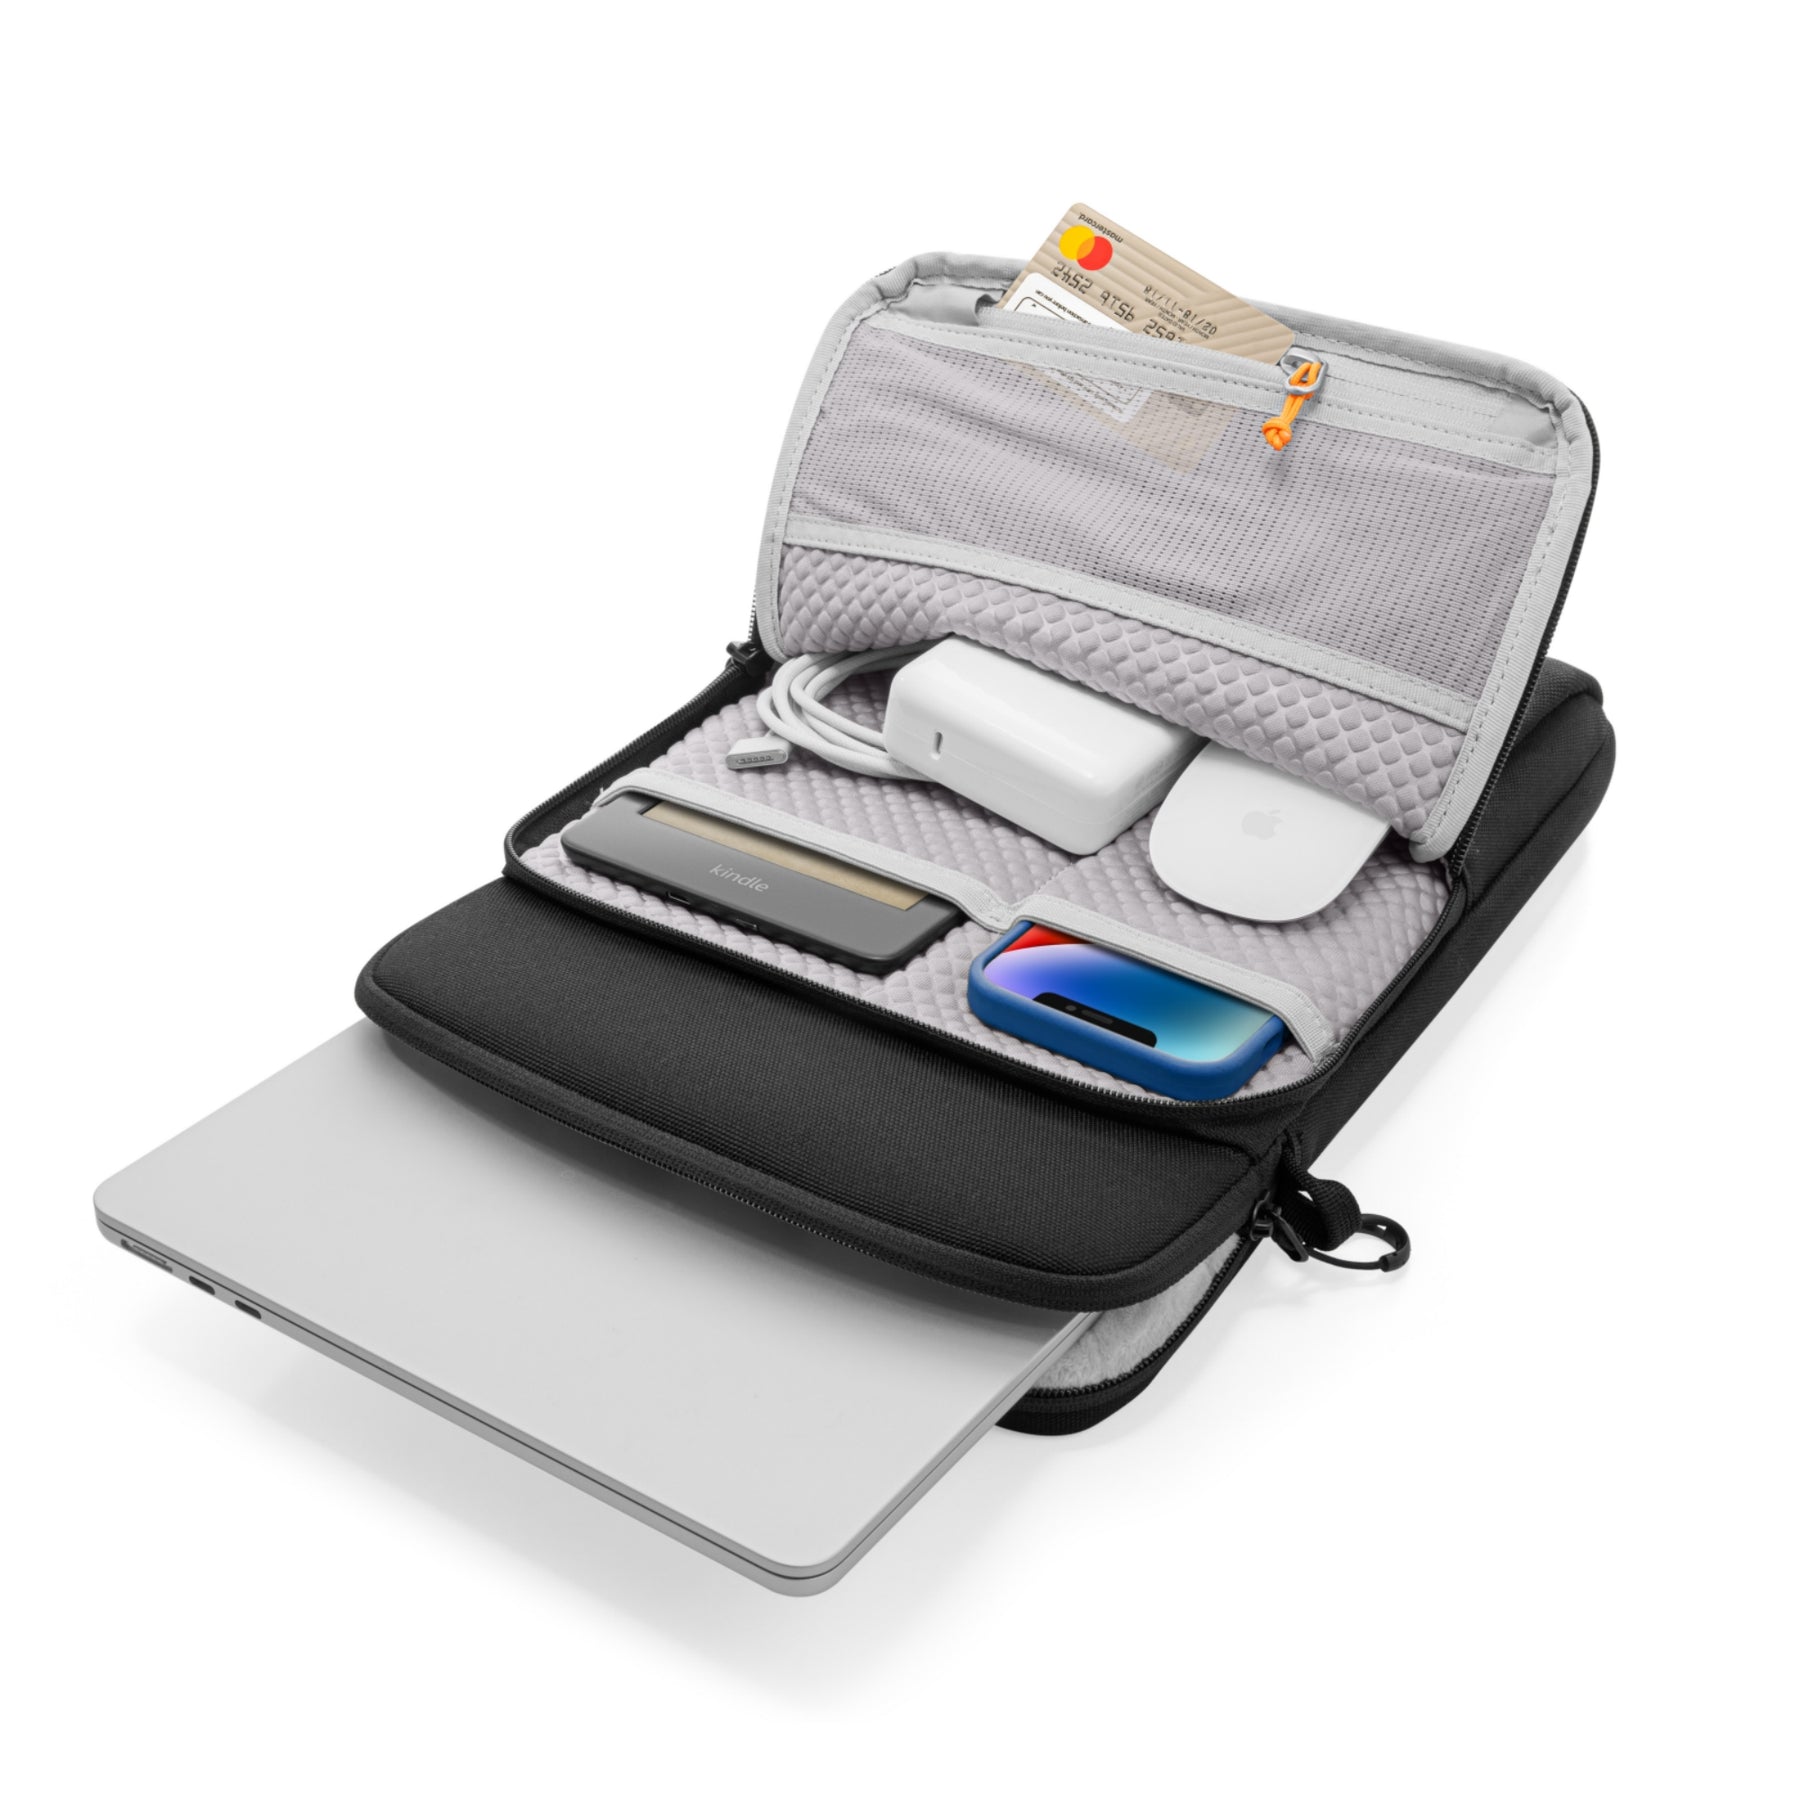 DefenderACE-A03 Laptop Shoulder Bag For 13" MacBook Pro & Air